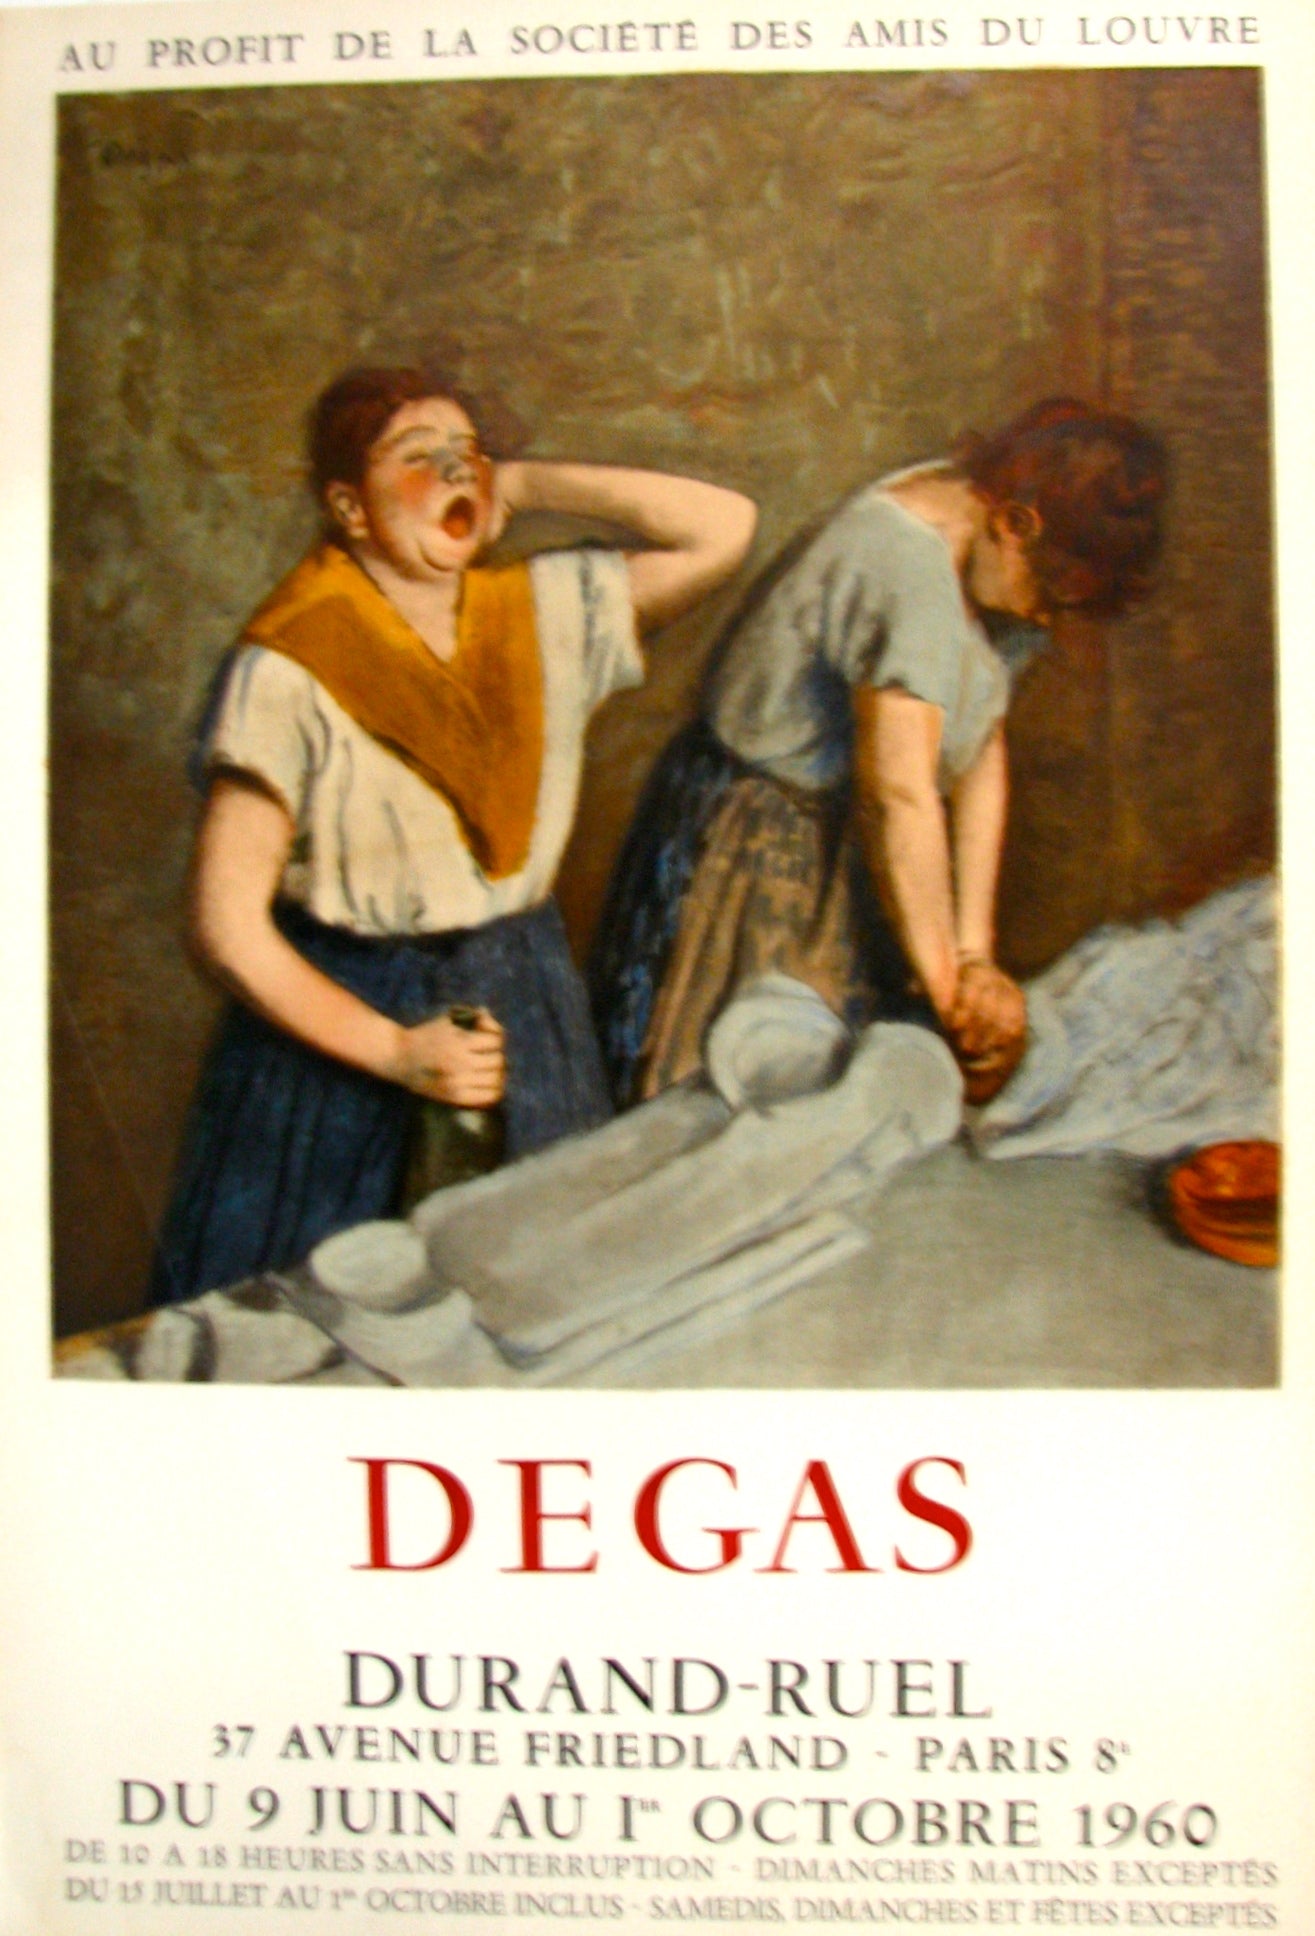 Durand-Ruel by Edgar Degas - Mourlot Editions - Fine_Art - Poster - Lithograph - Wall Art - Vintage - Prints - Original